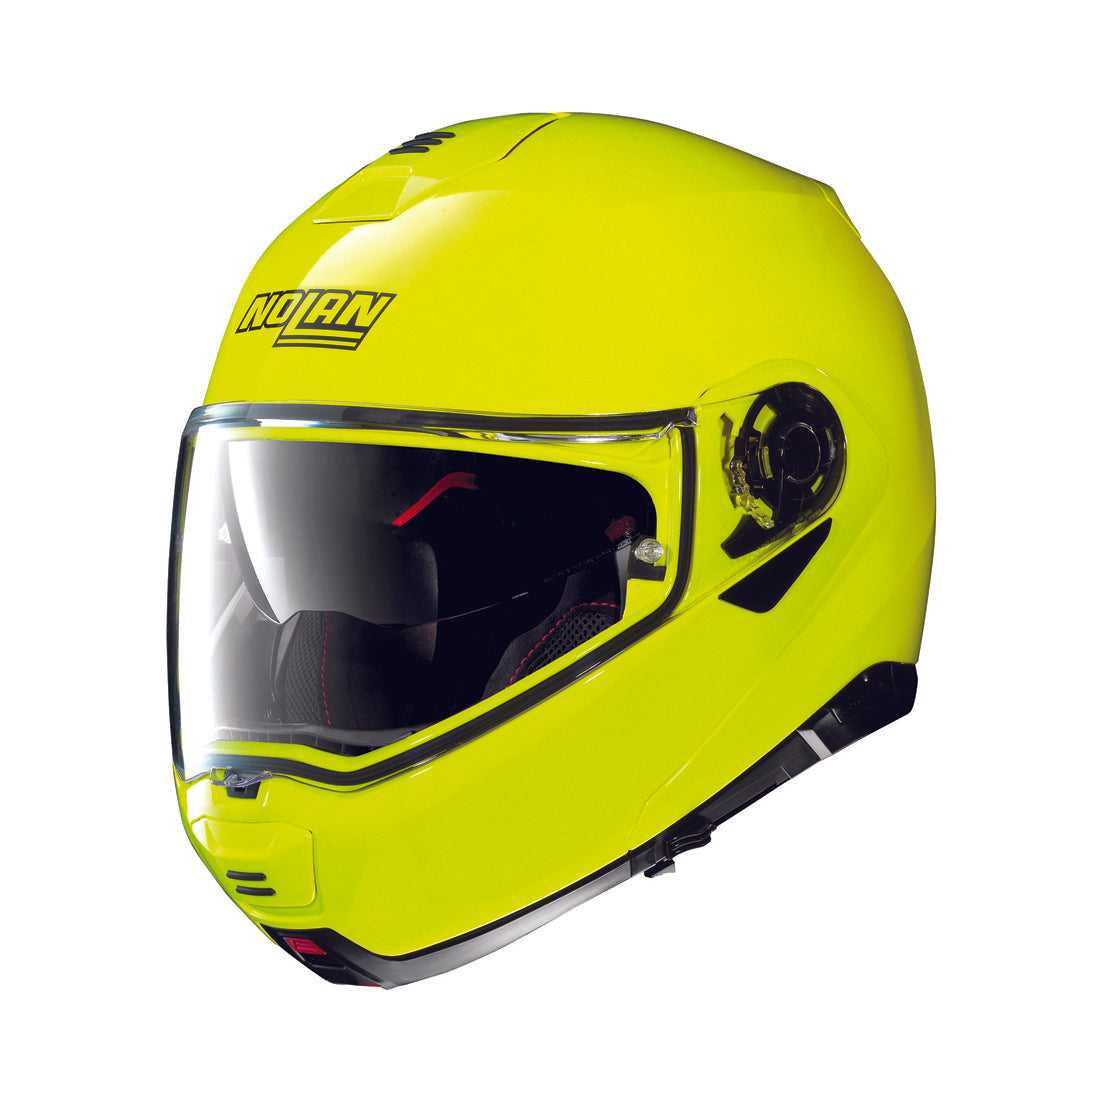 NOLAN, Nolan N100-5 N-Com Flip Face Helmet - yellow - XS only